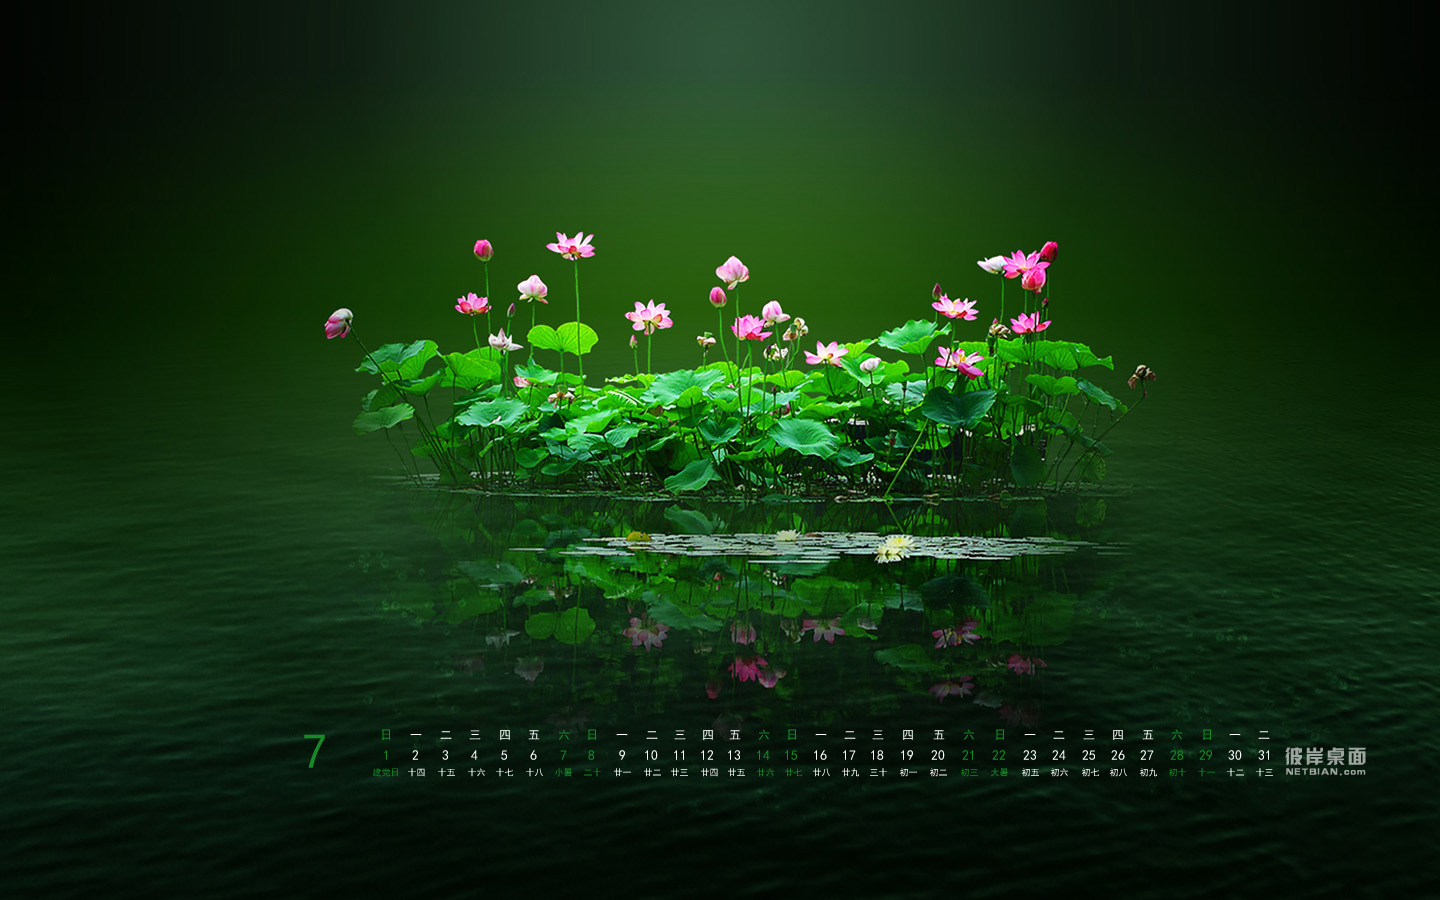 Lotus pond July 2012 calendar scenery desktop wallpaper